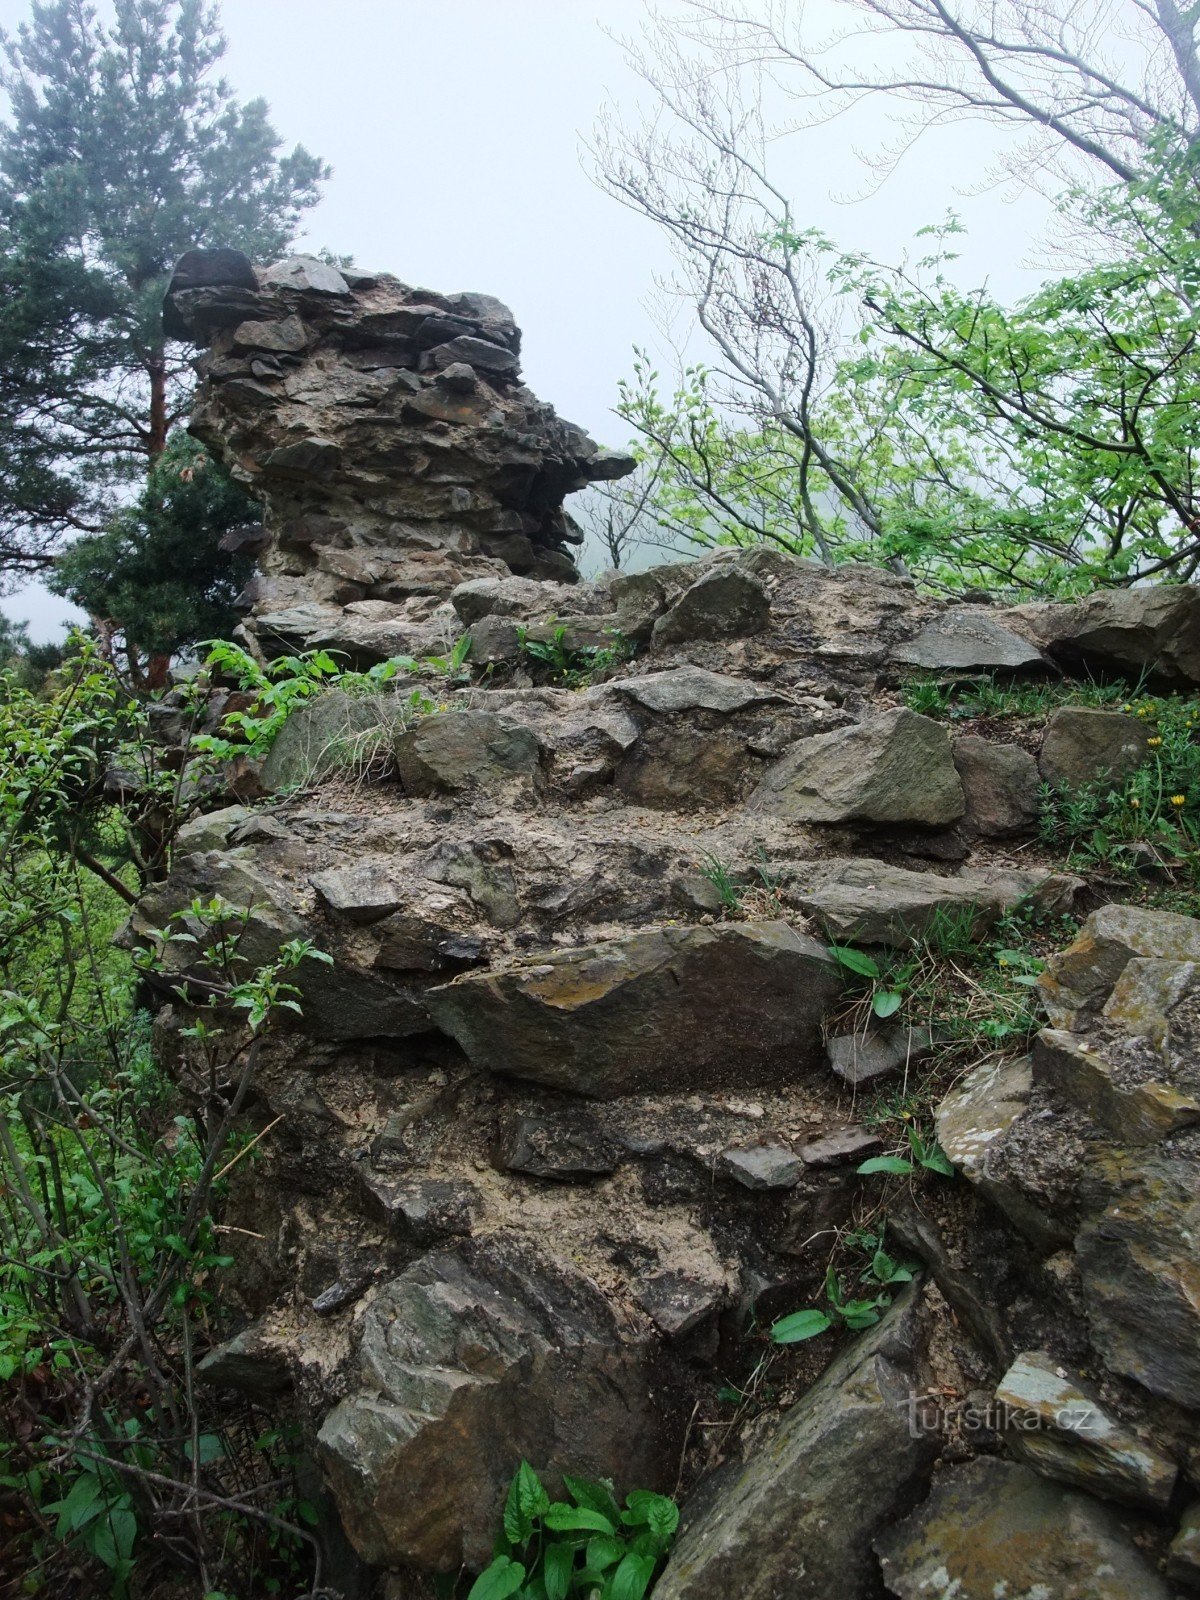 Il misterioso castello di Kyšperk nei Monti Metalliferi